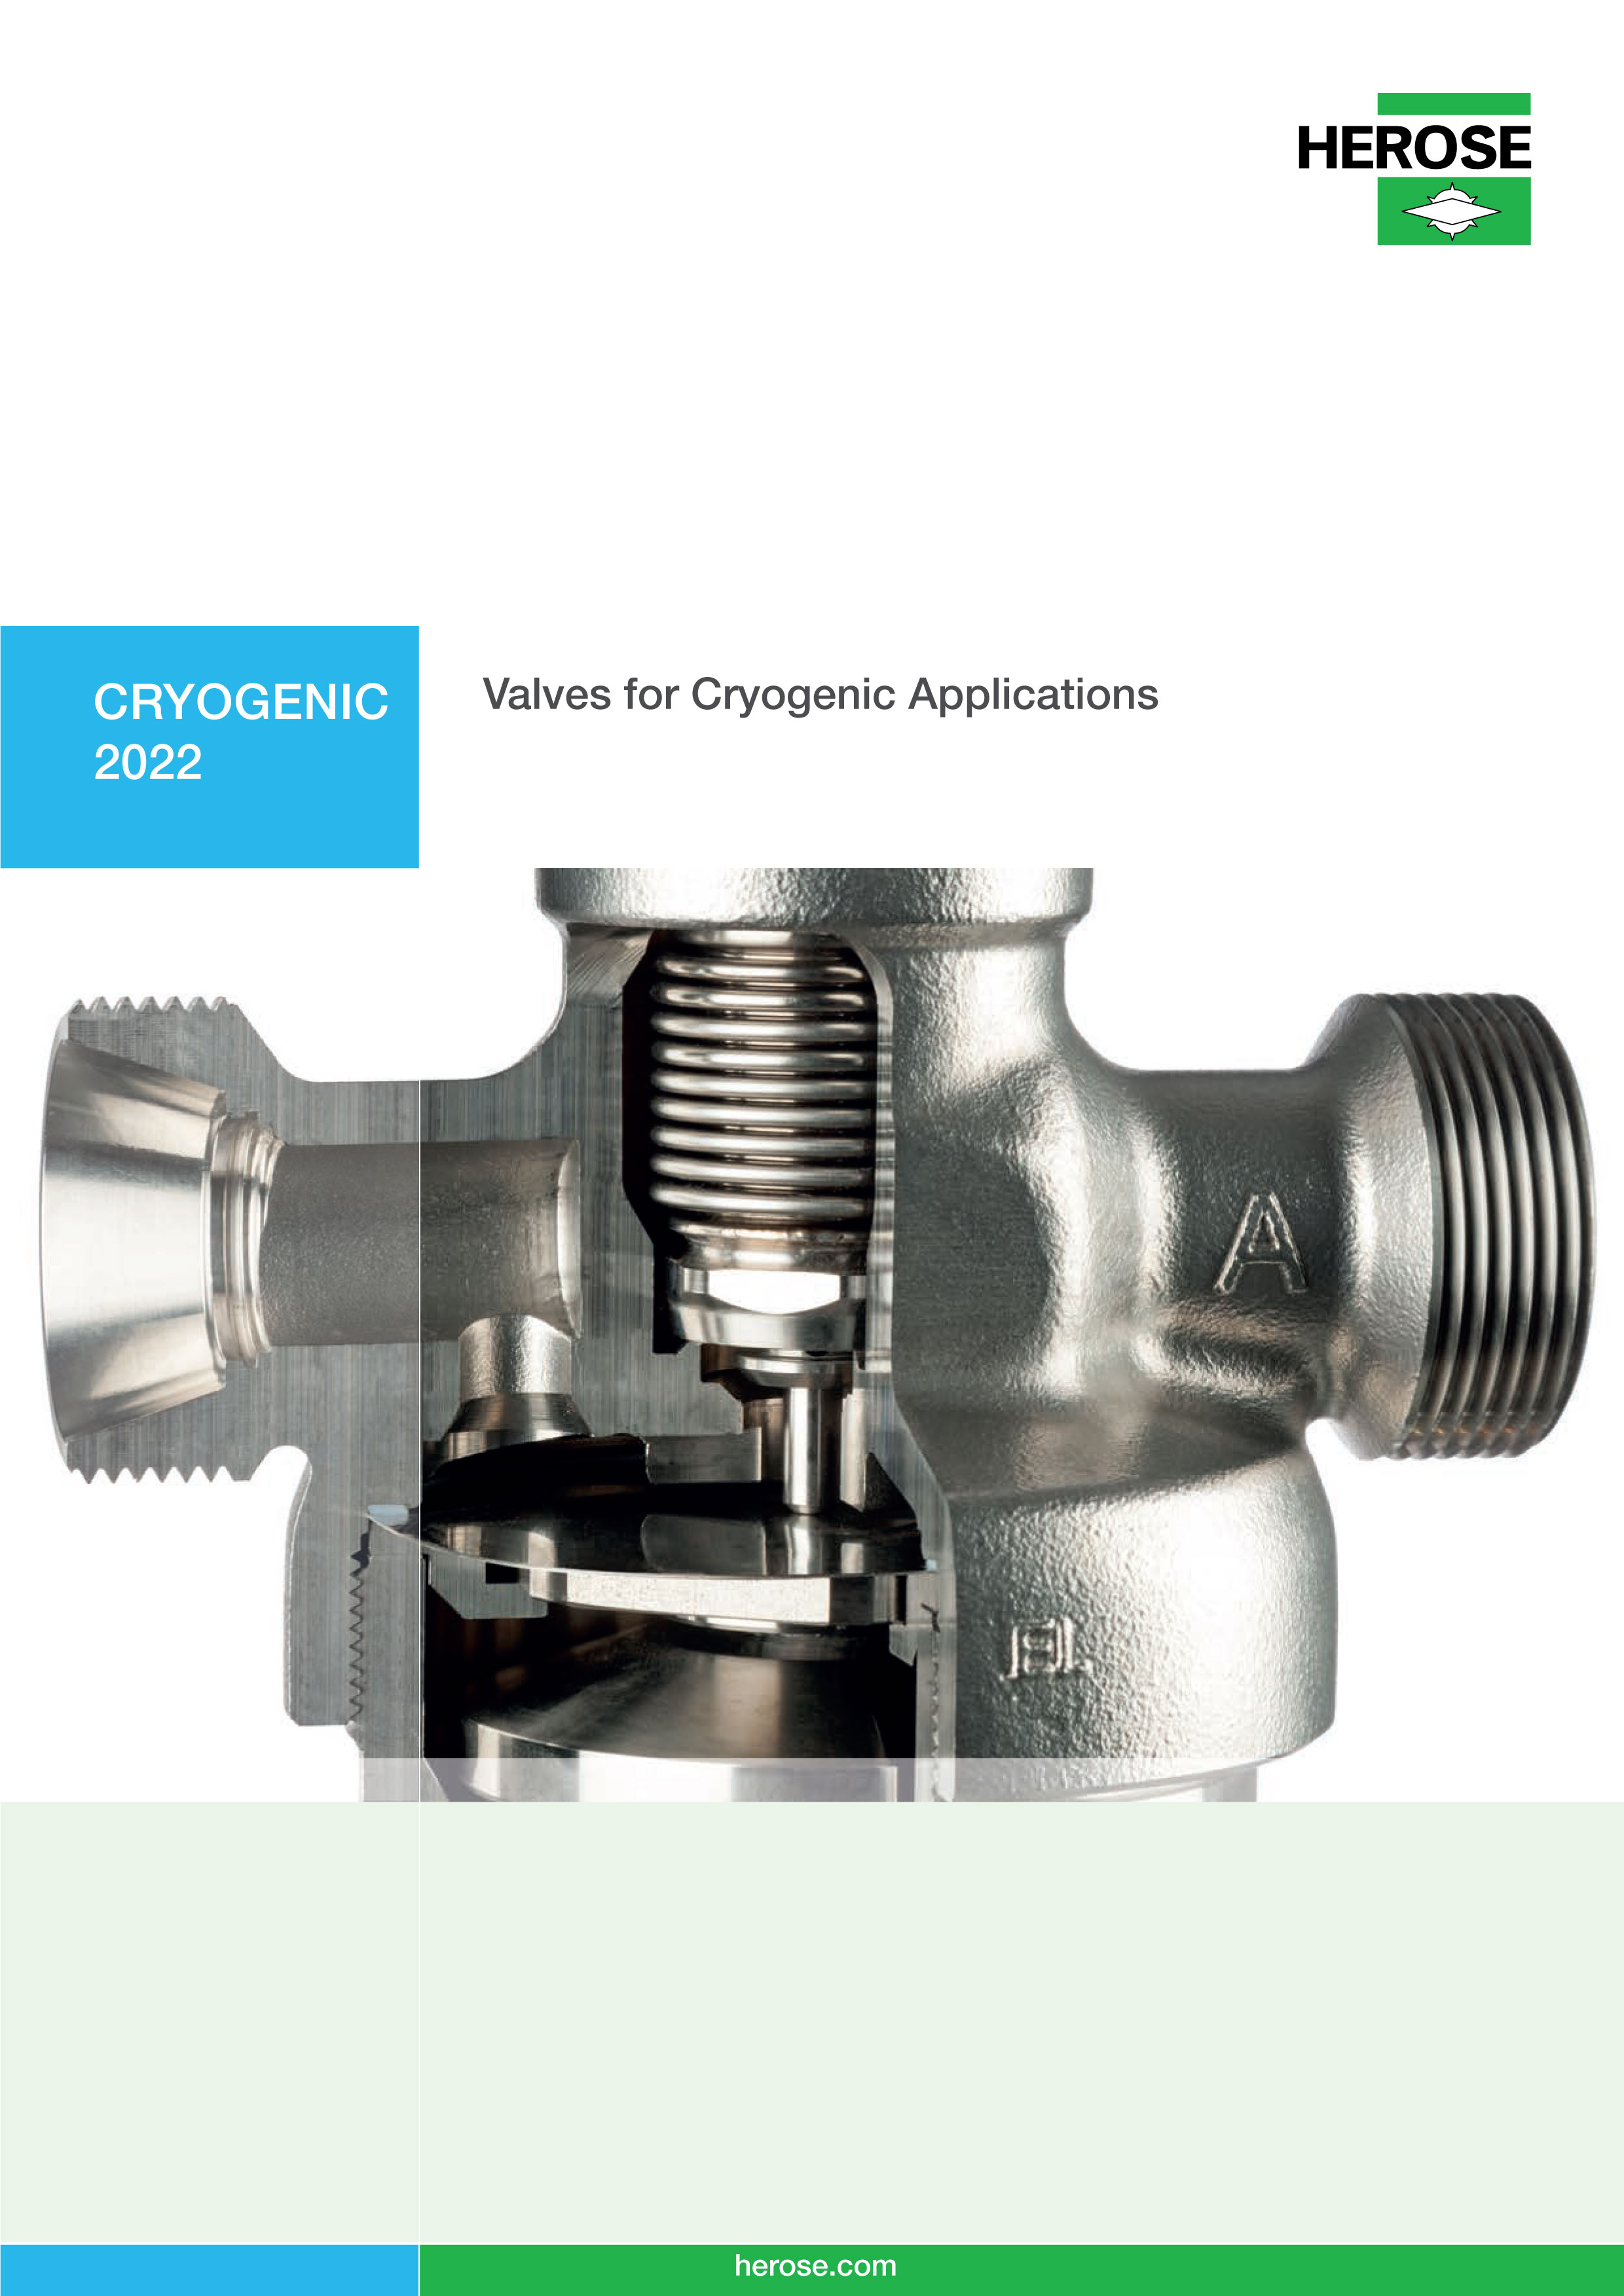 HEROSE Valves for Cryogenics Applications 2022